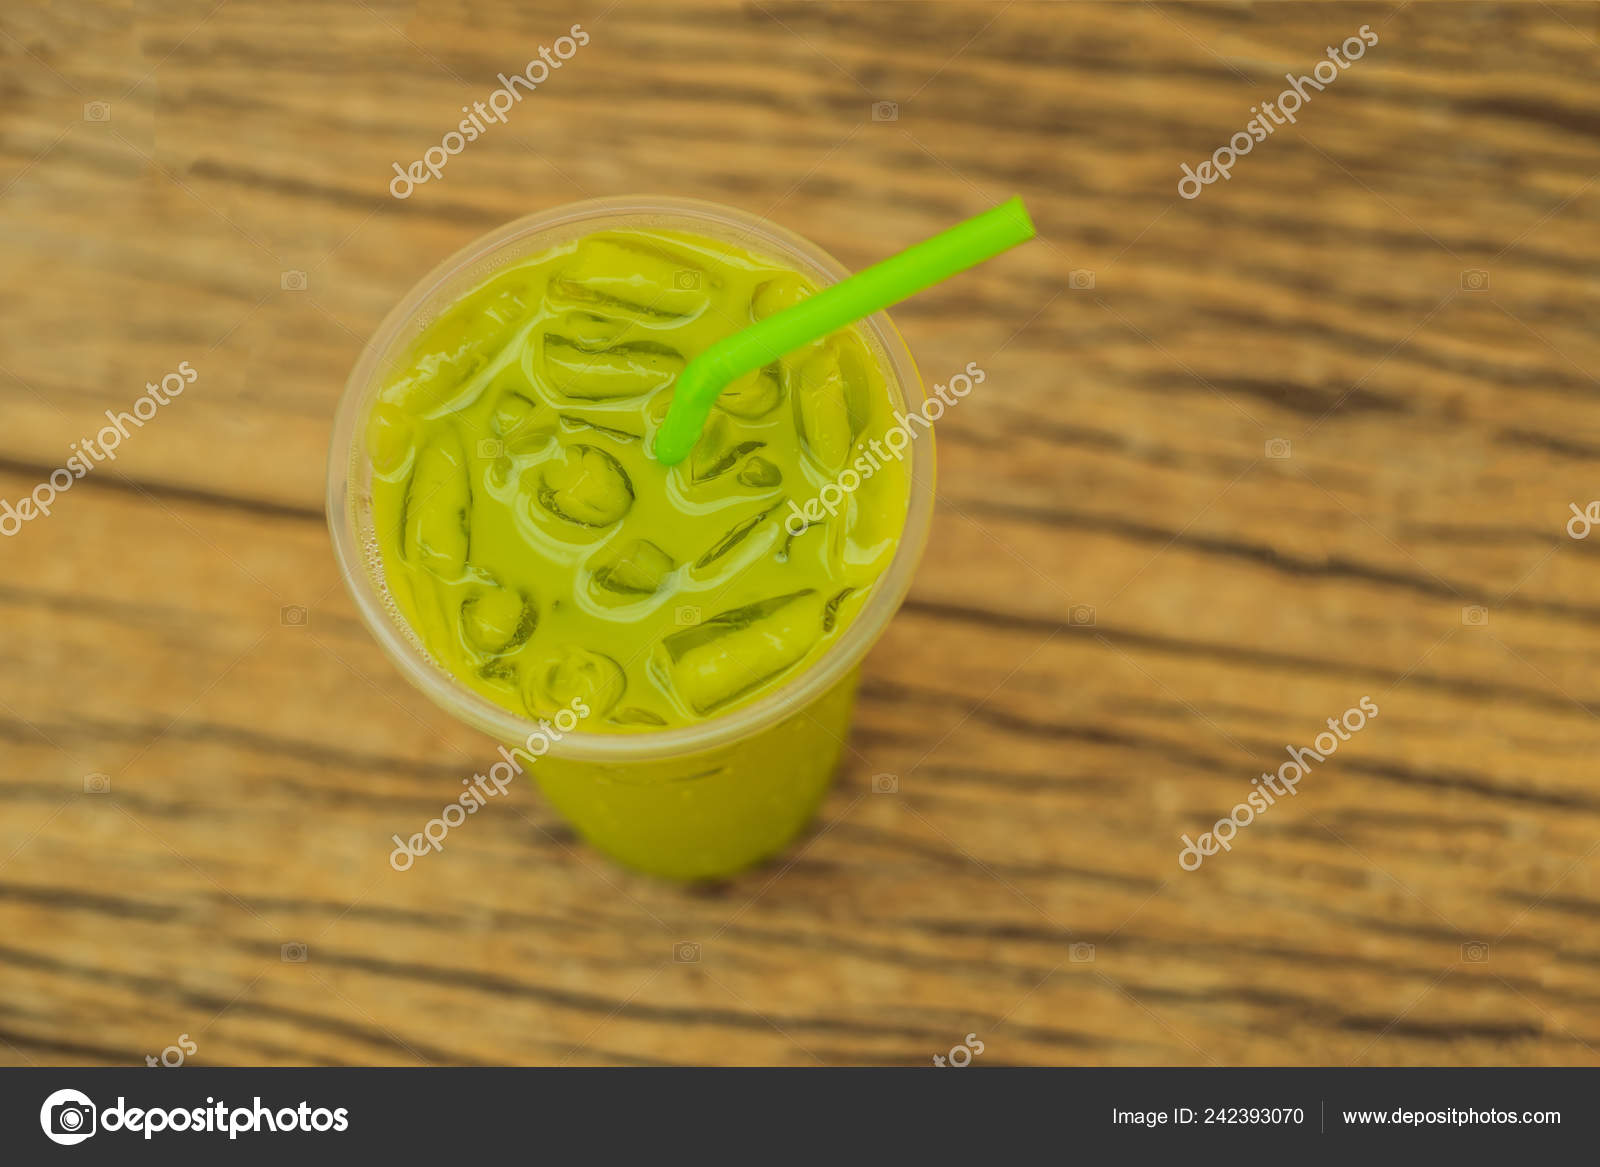 https://st4.depositphotos.com/8509220/24239/i/1600/depositphotos_242393070-stock-photo-green-tea-latte-with-ice.jpg